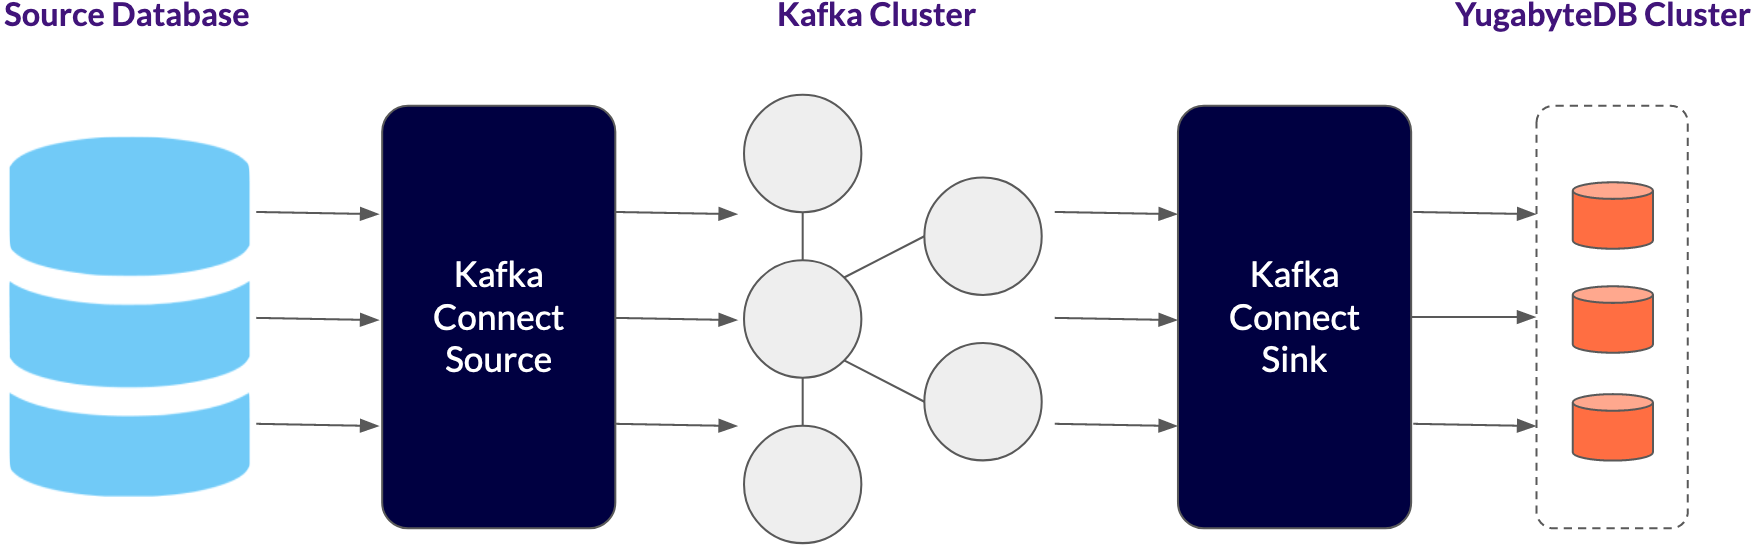 YugabyteDB-Sink-Connector-for-Apache-Kafka-Graphic